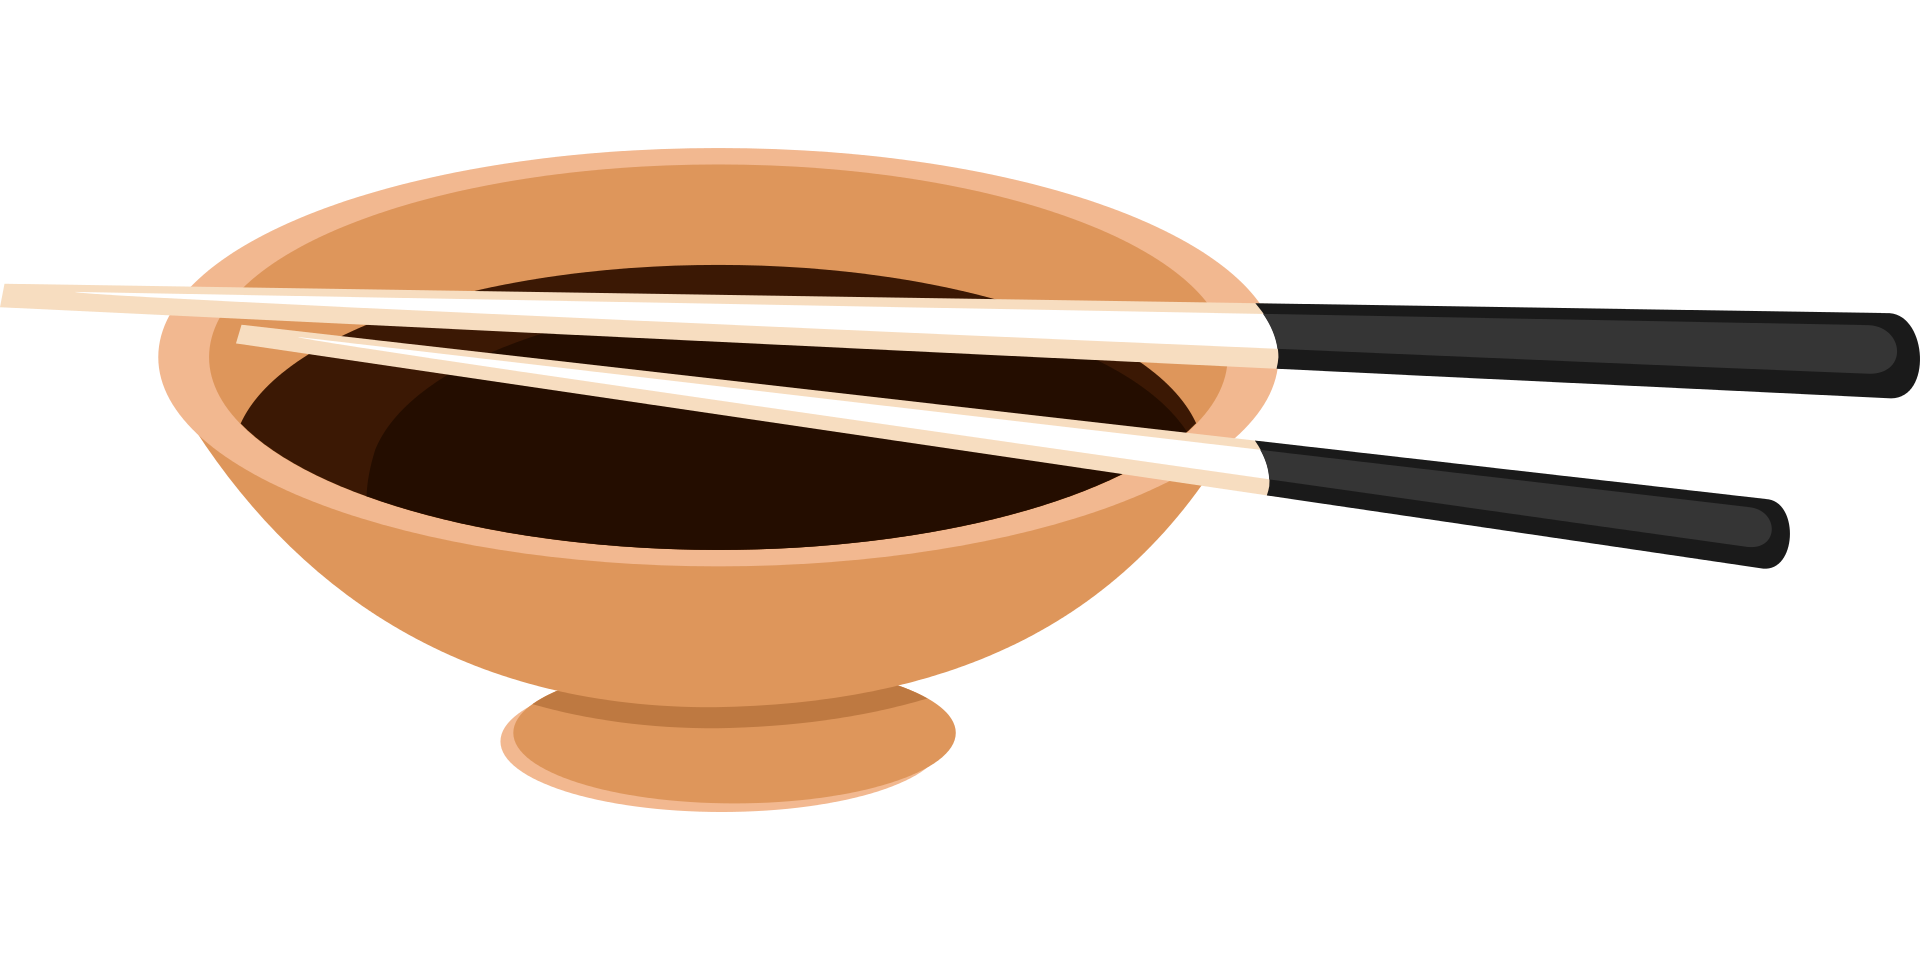 Chopsticks on a Bowl PNG Image